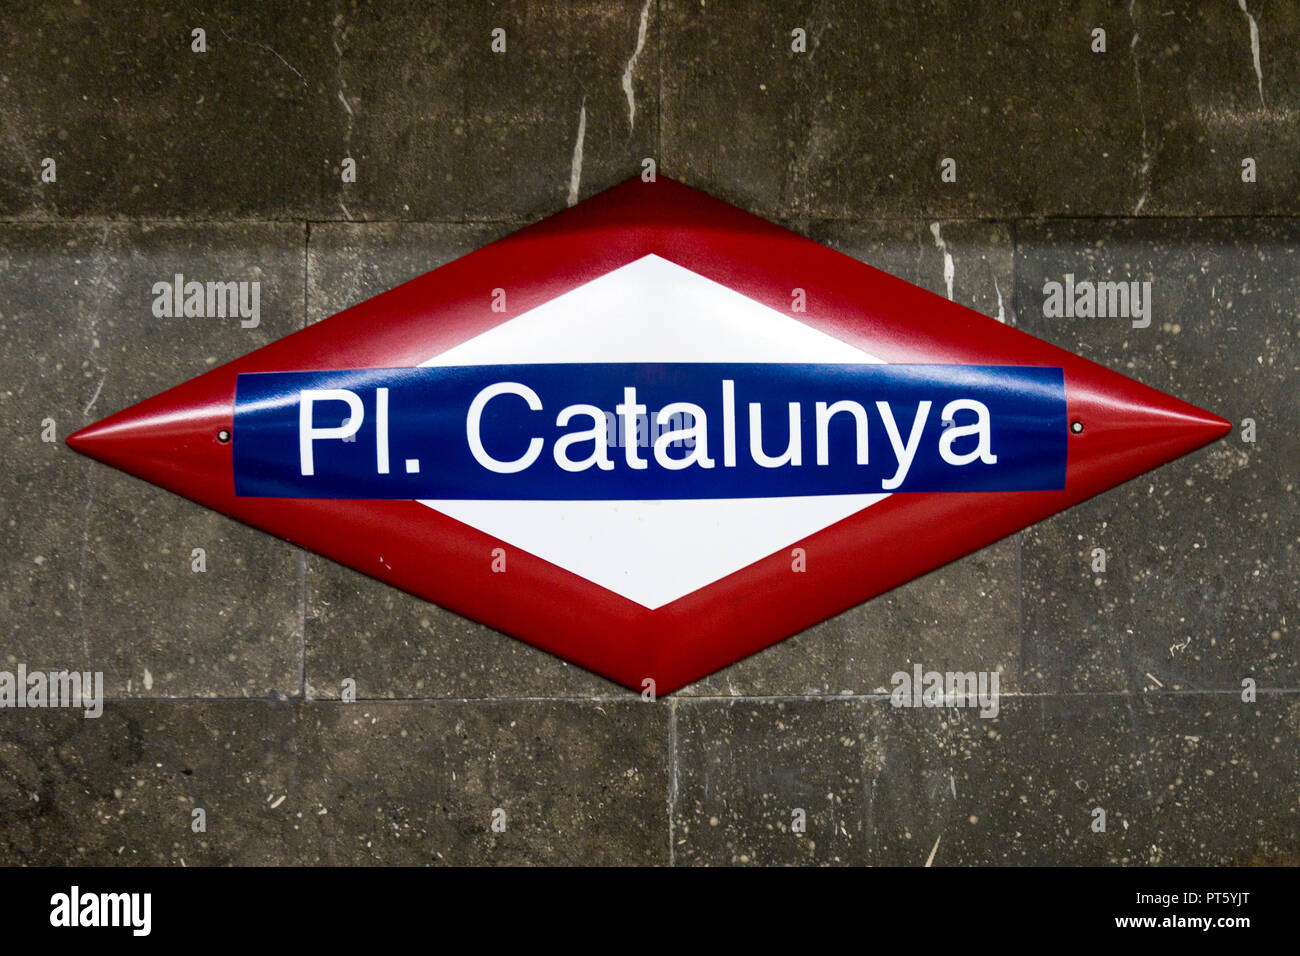 Placa de Catalunya train station sign on the platform, Barcelona, Spain Stock Photo